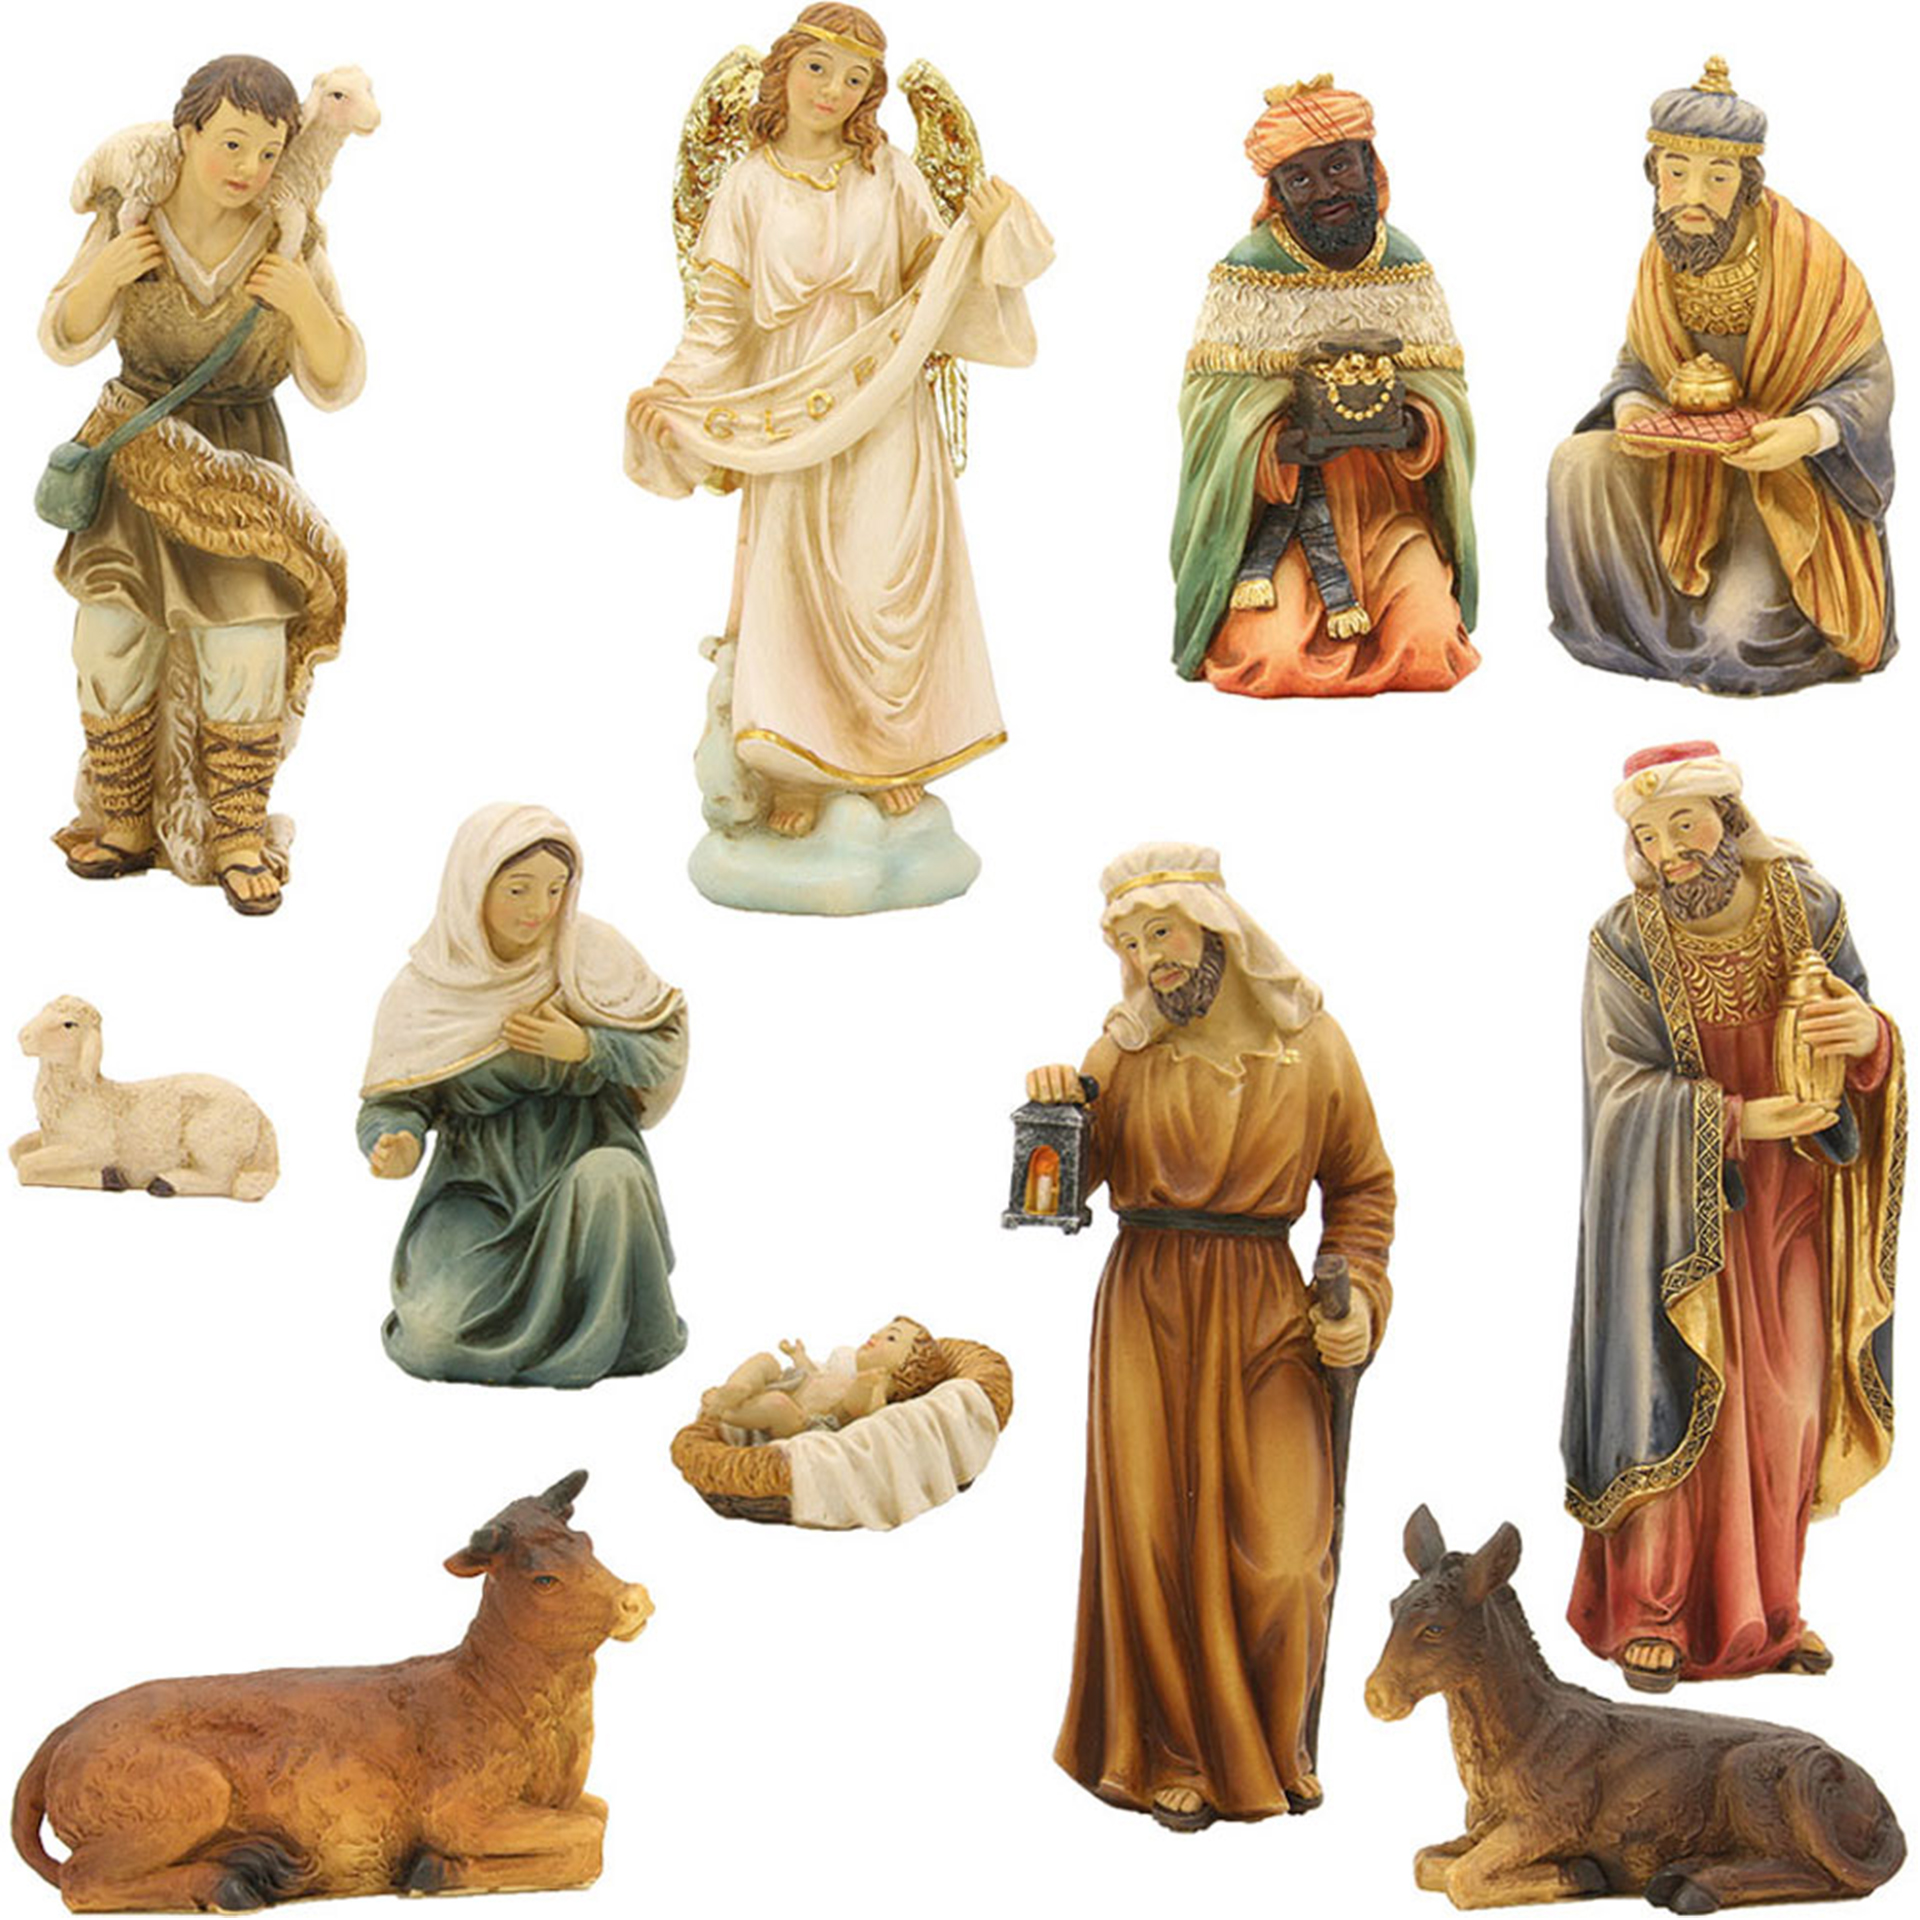 Orientalische Krippenfiguren, Maria, Josef, Jesuskind, Engel, Hl. Drei Könige, Tiere